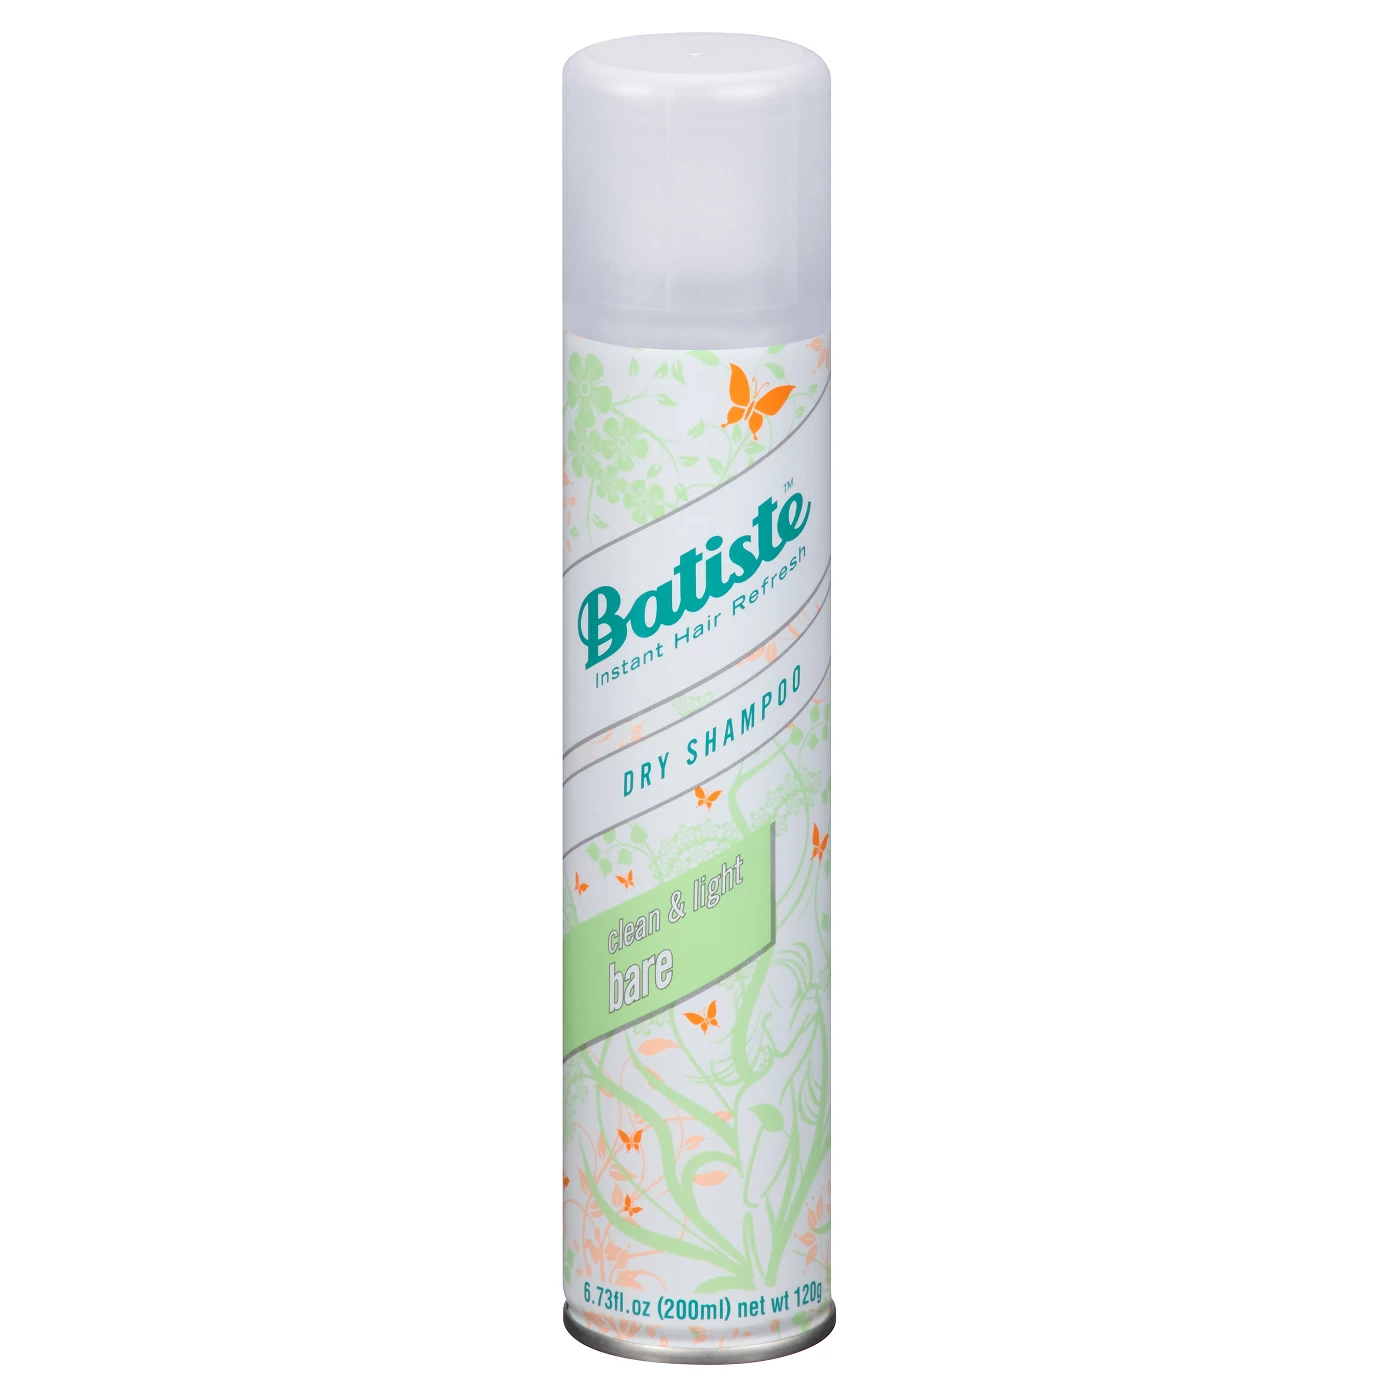 Batiste Clean & Light Bare Dry Shampoo - 6.73 fl oz - image 1 of 3